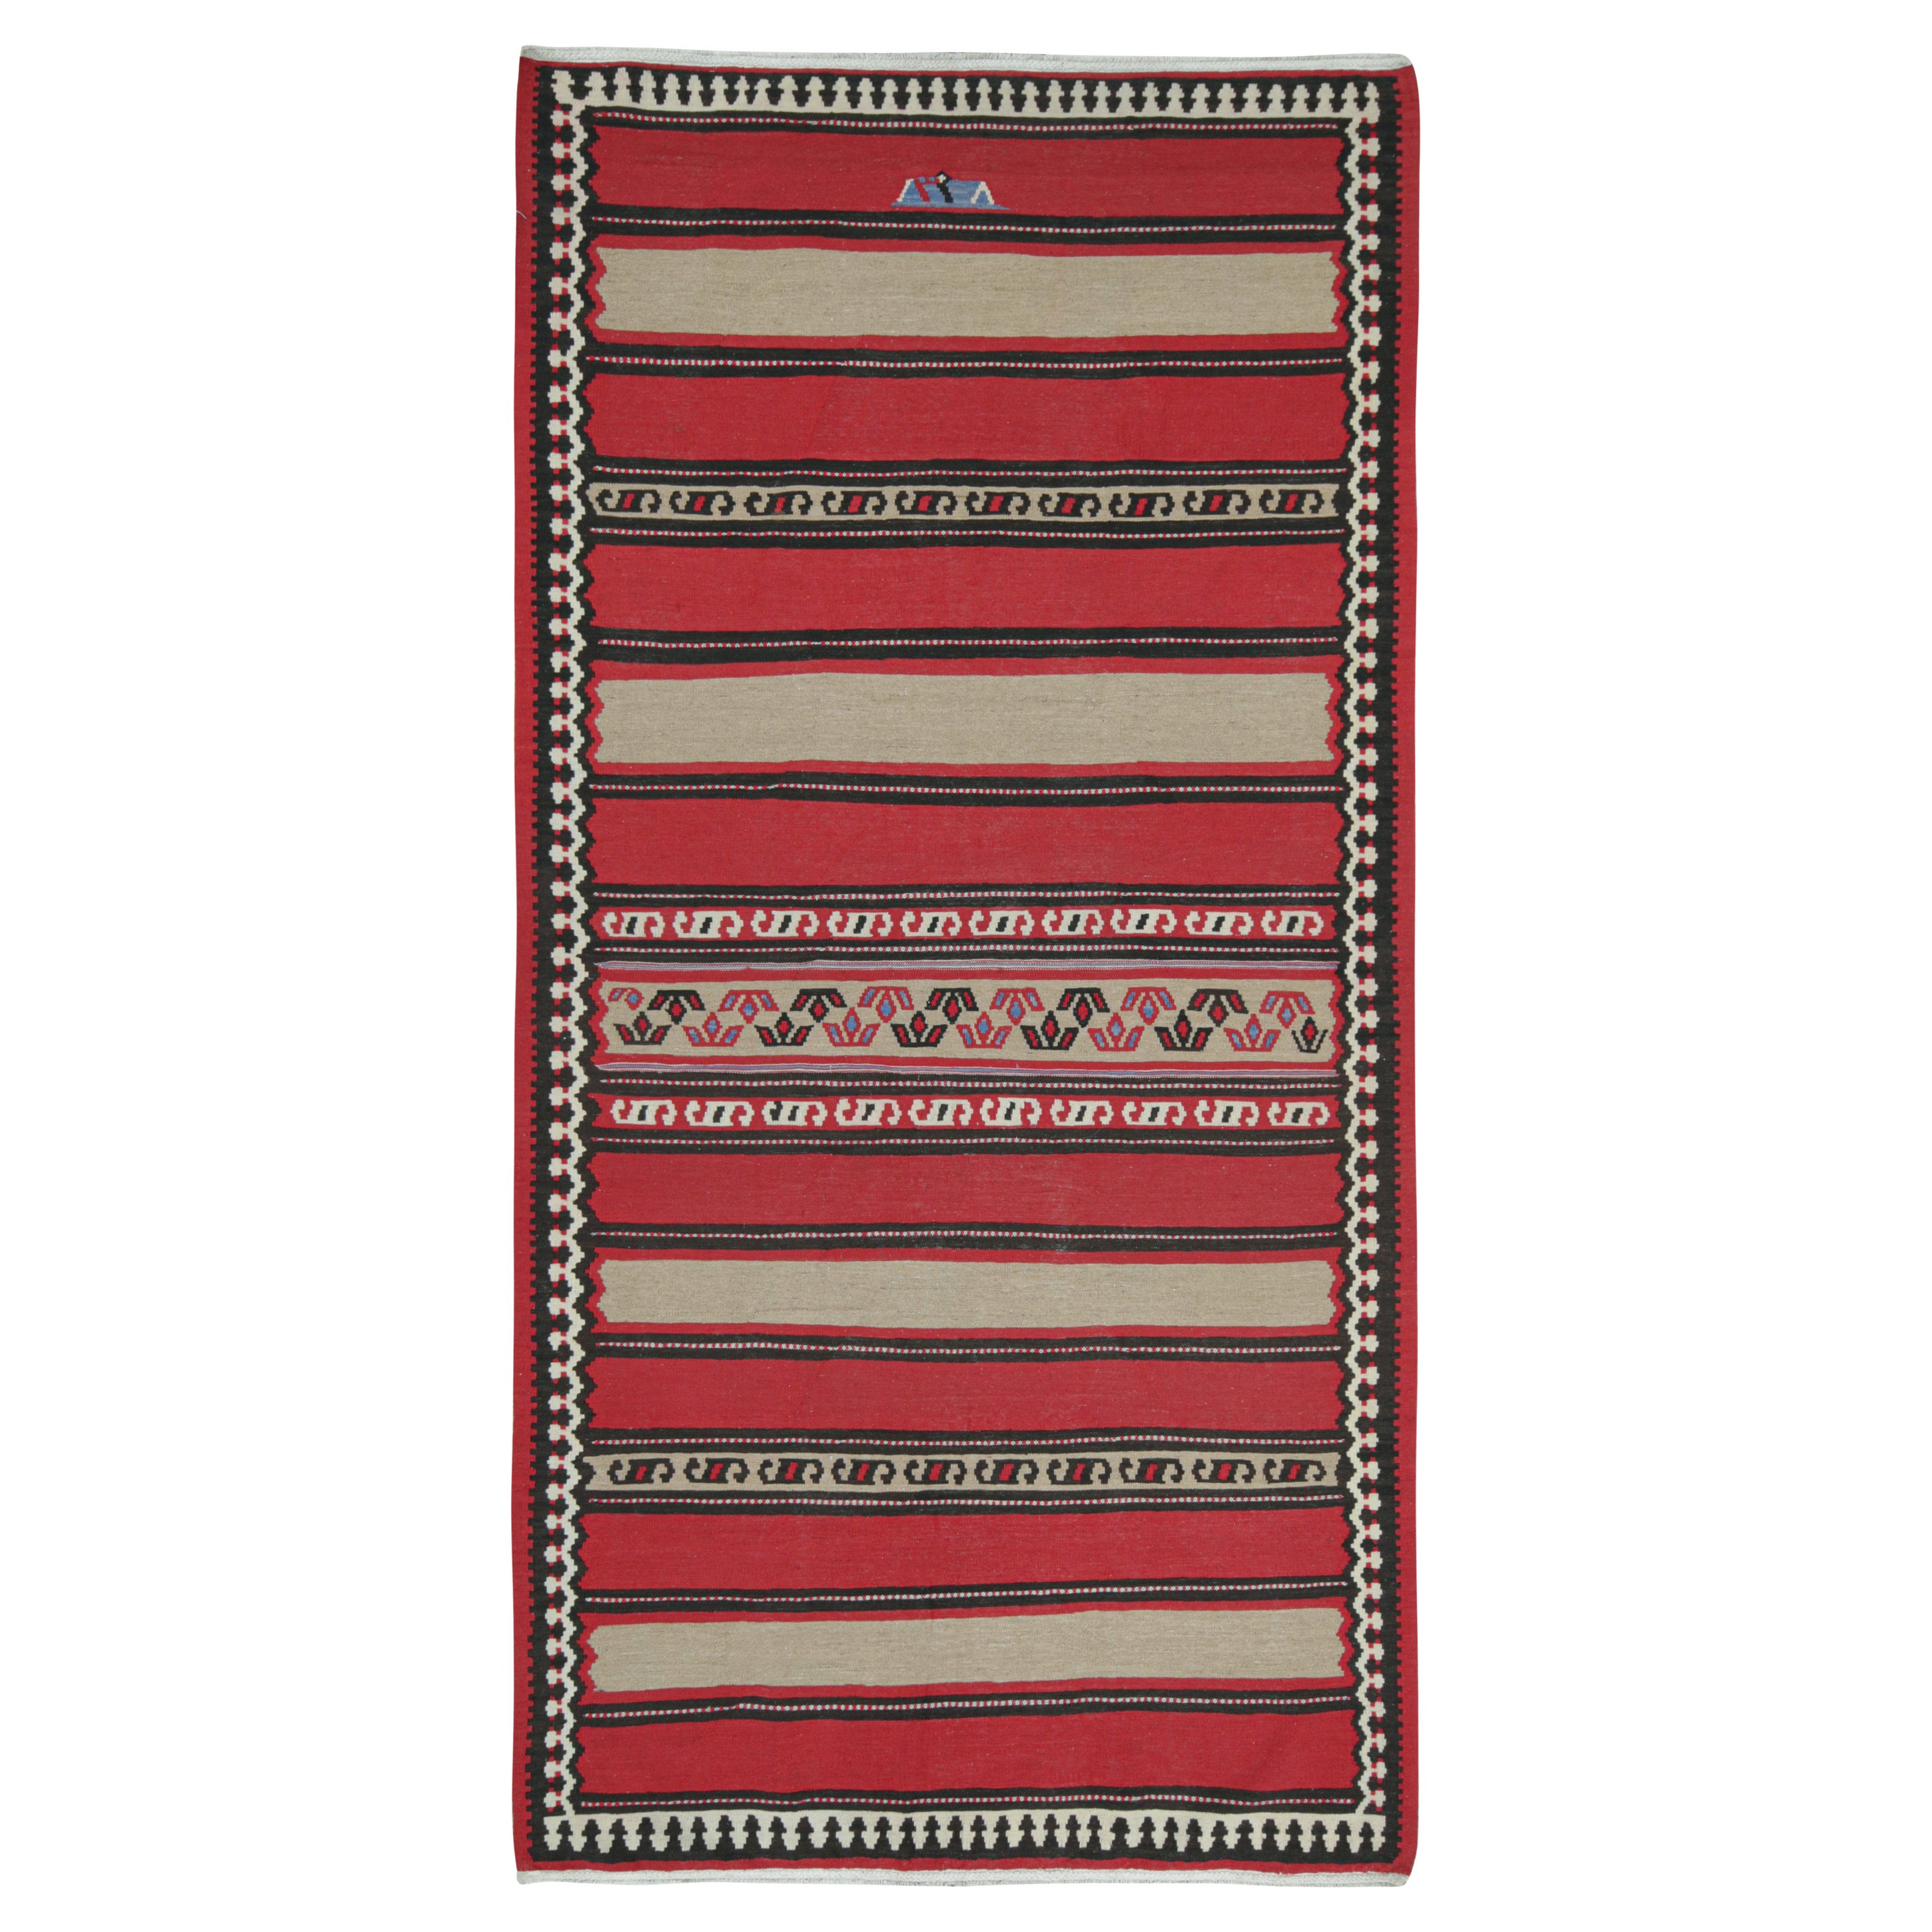 Vintage Shahsavan Persian Kilim with Red, Beige and Brown Stripes